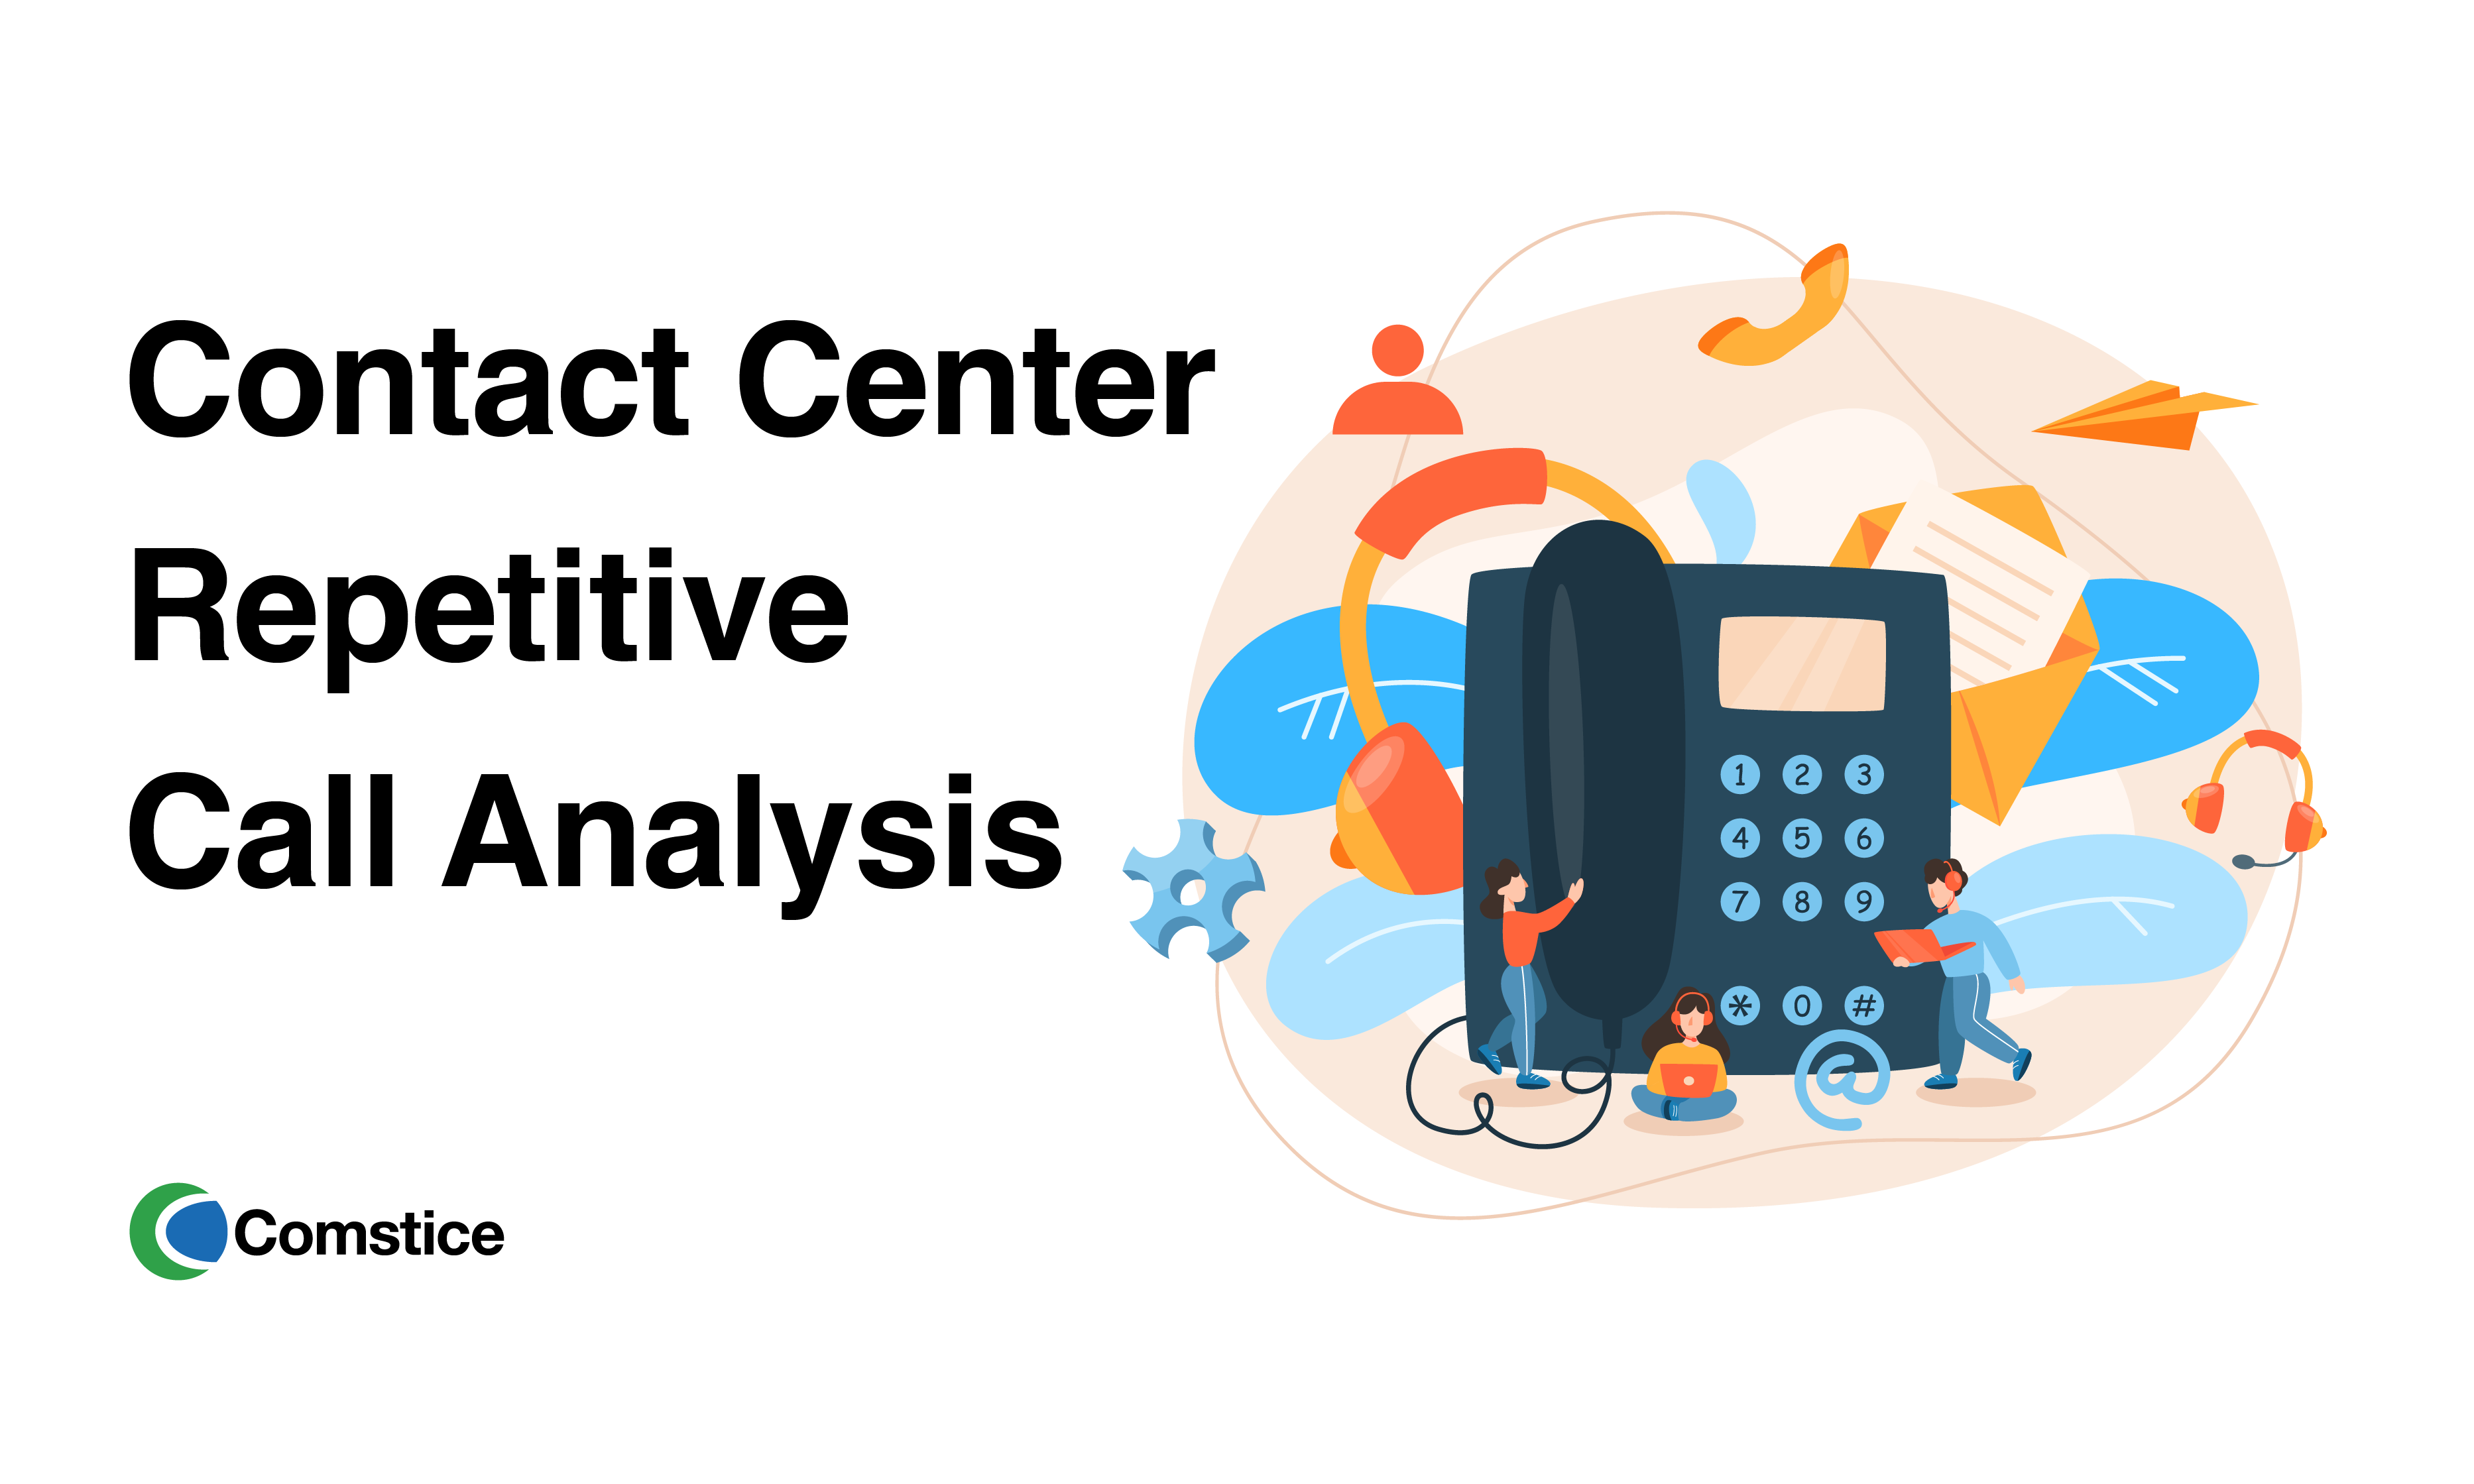 Contact Center Repetitive Call Analysis